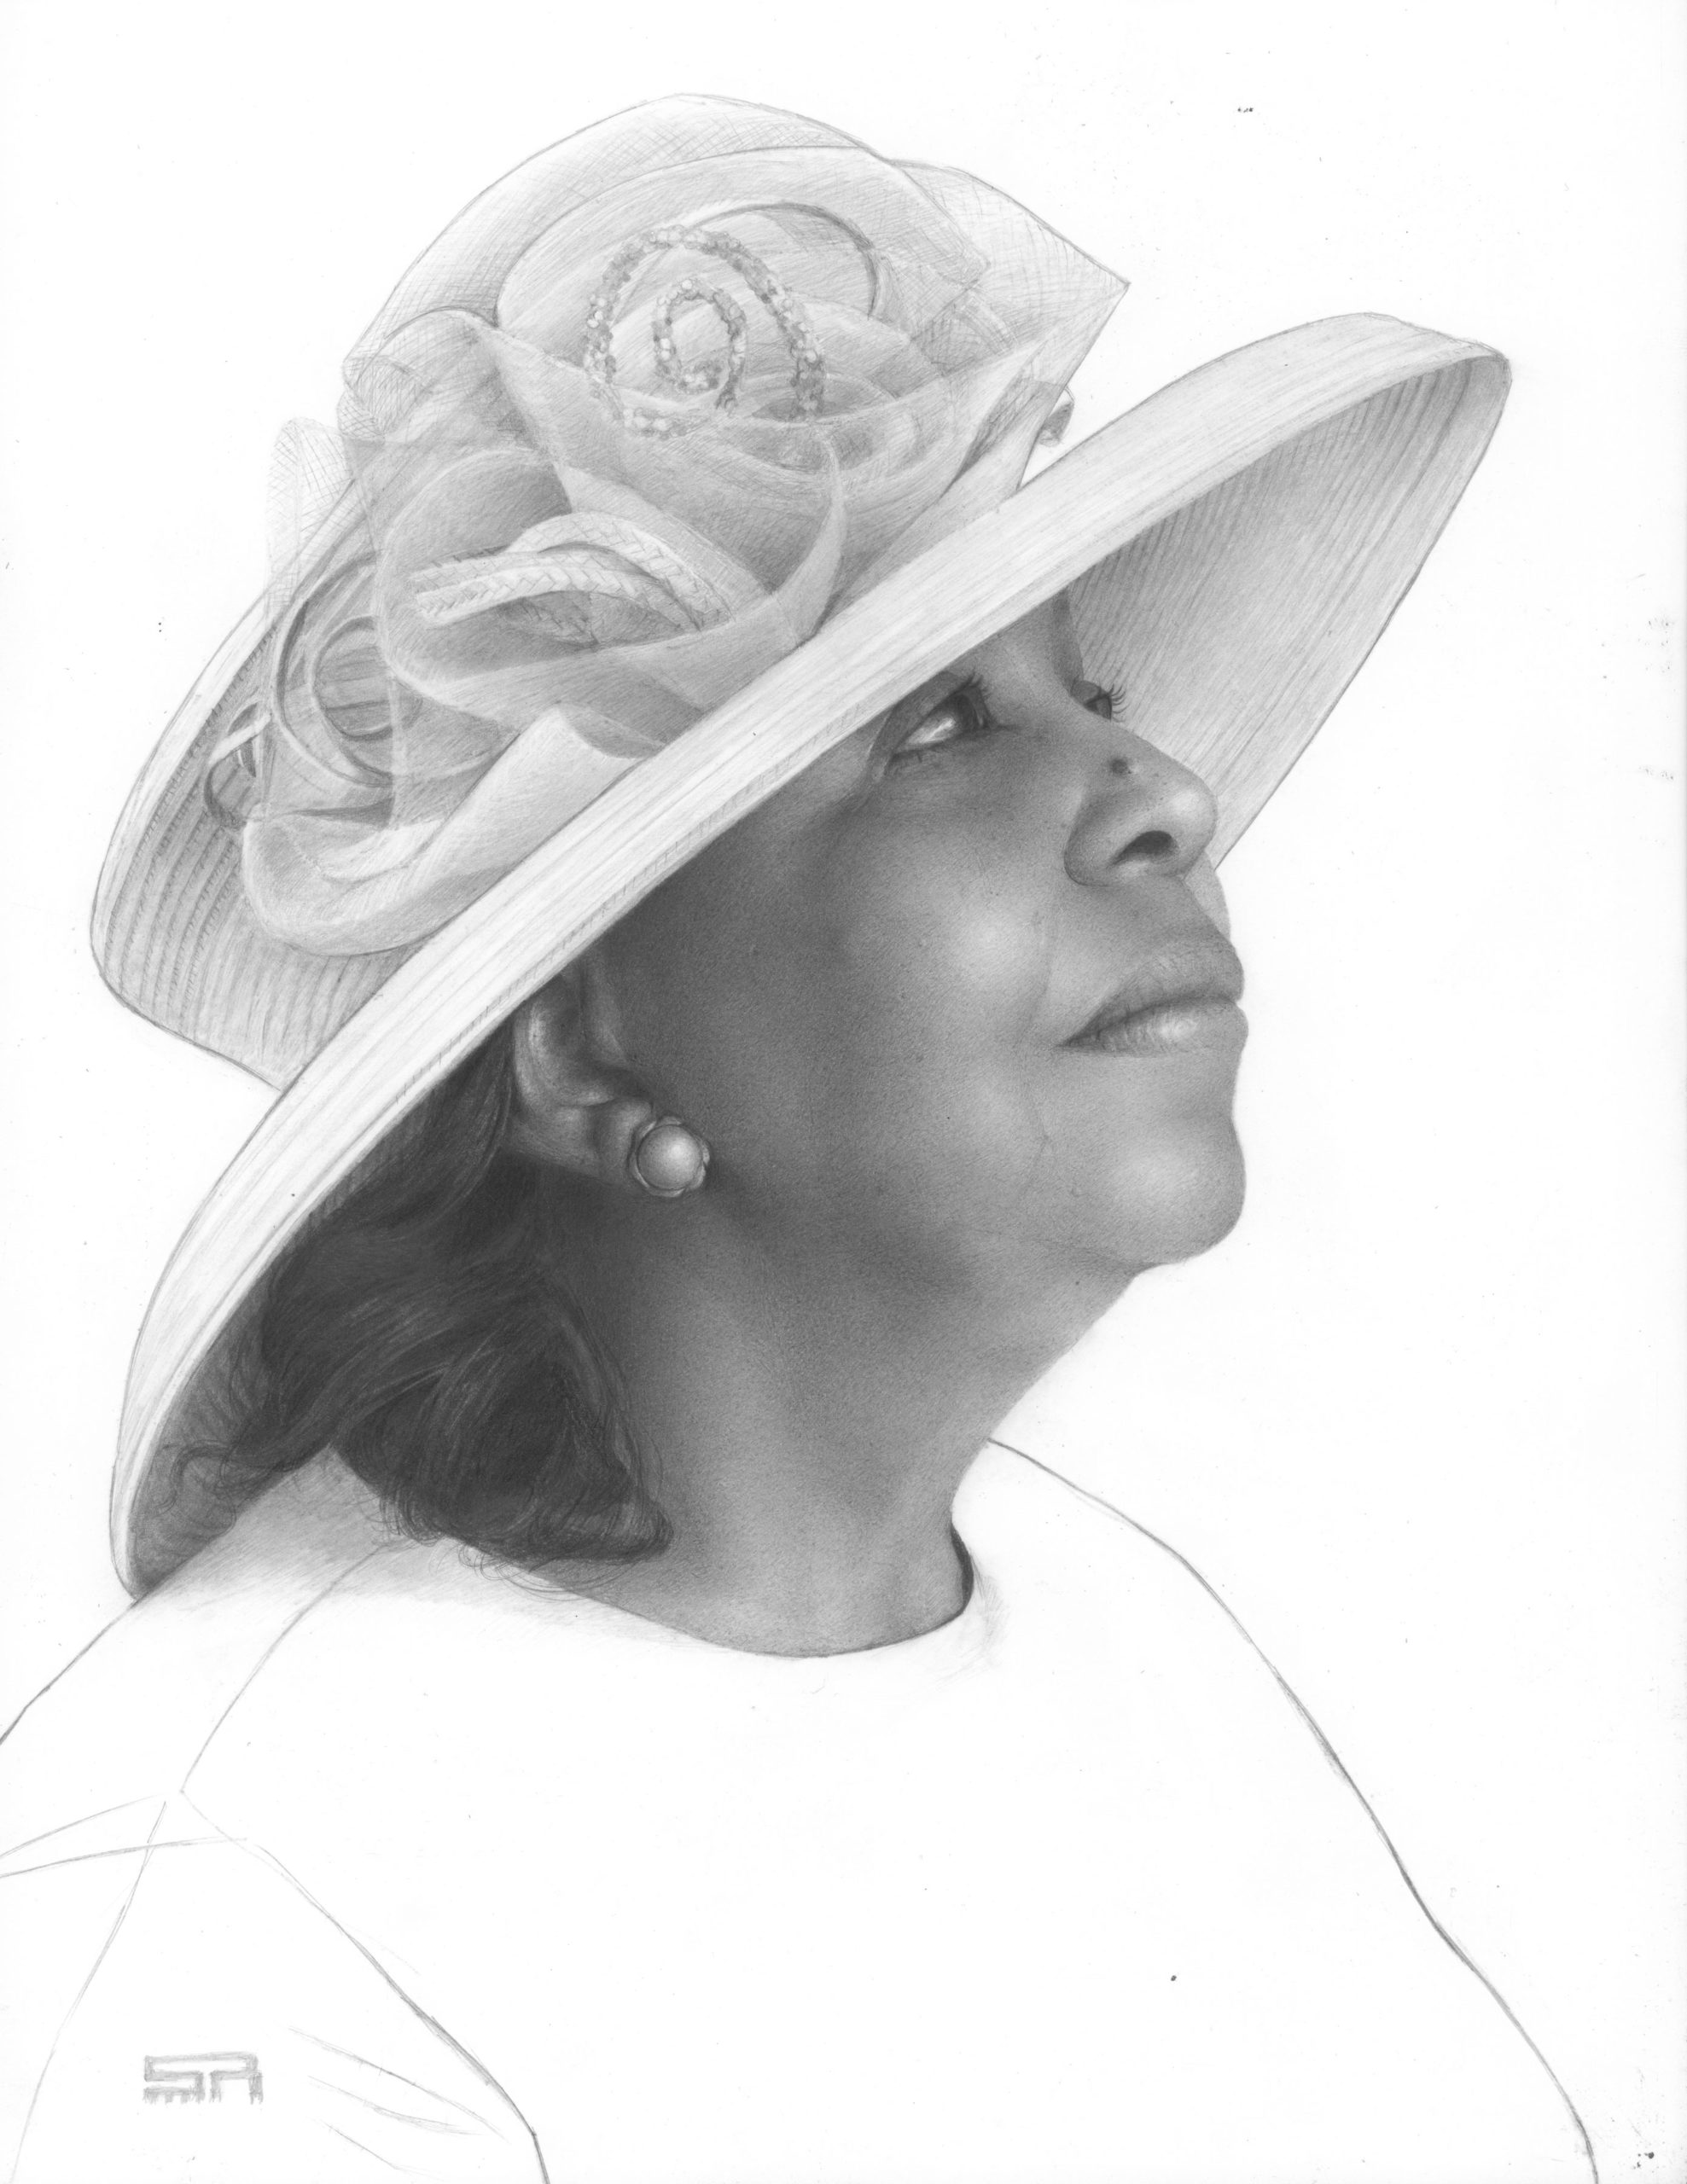 Graphite portrait drawing - Stanley Rayfield - RealismToday.com